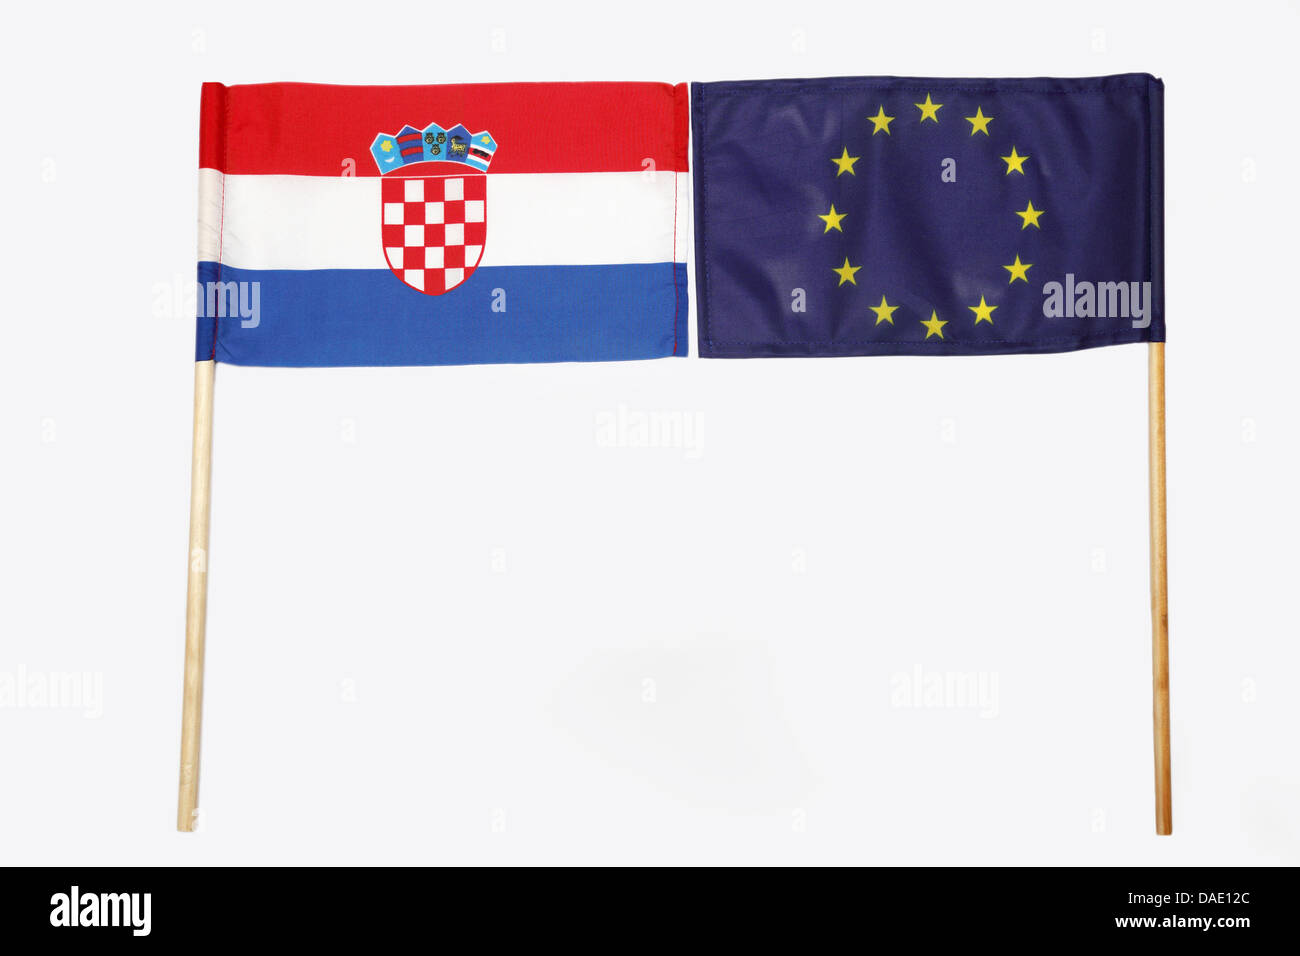 Ilustratione of European Union and Croatian flag. Stock Photo